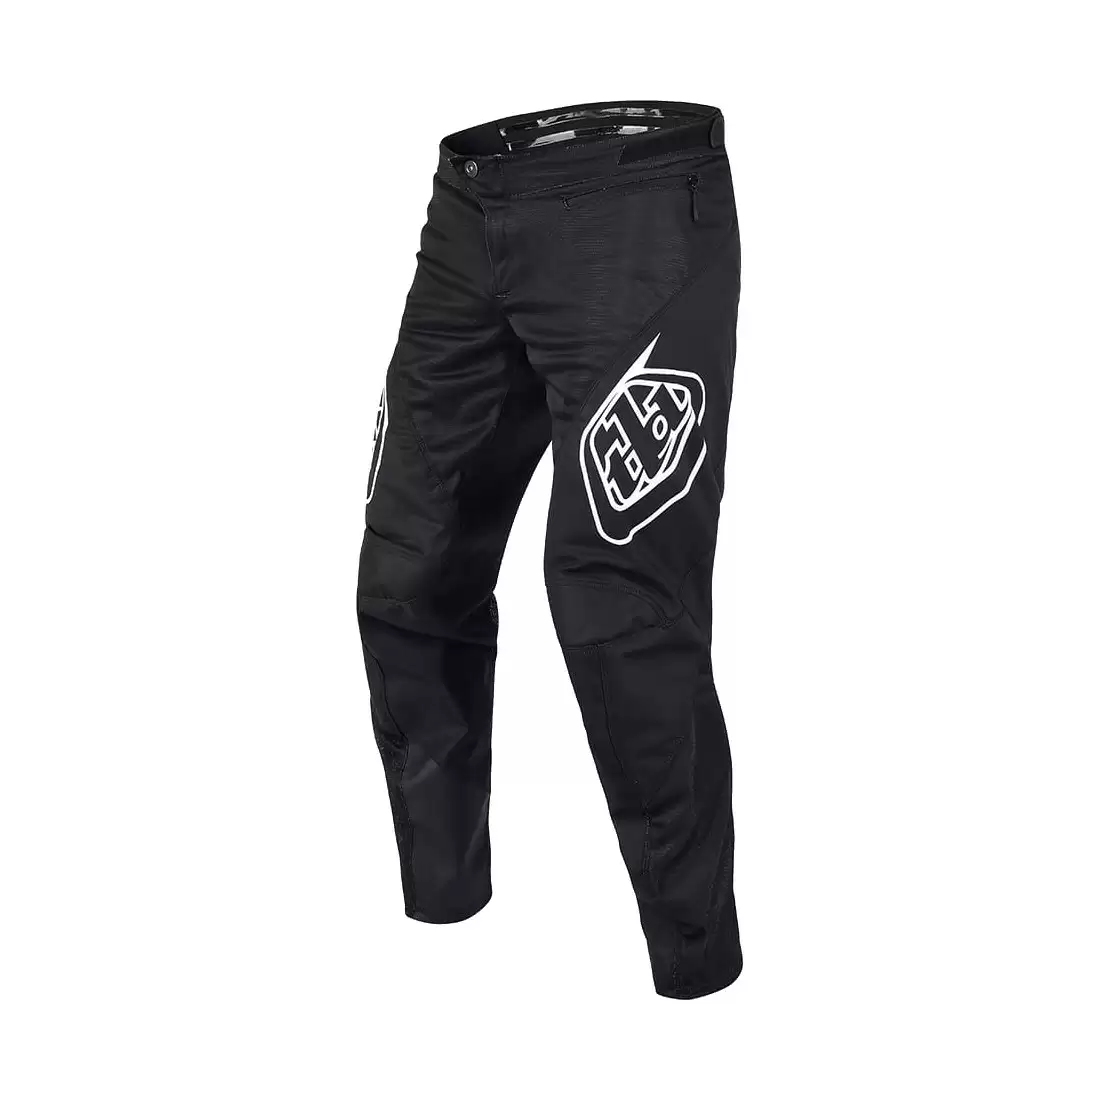 Pantalones MTB DH/Enduro Sprint Negro Talla XL - image